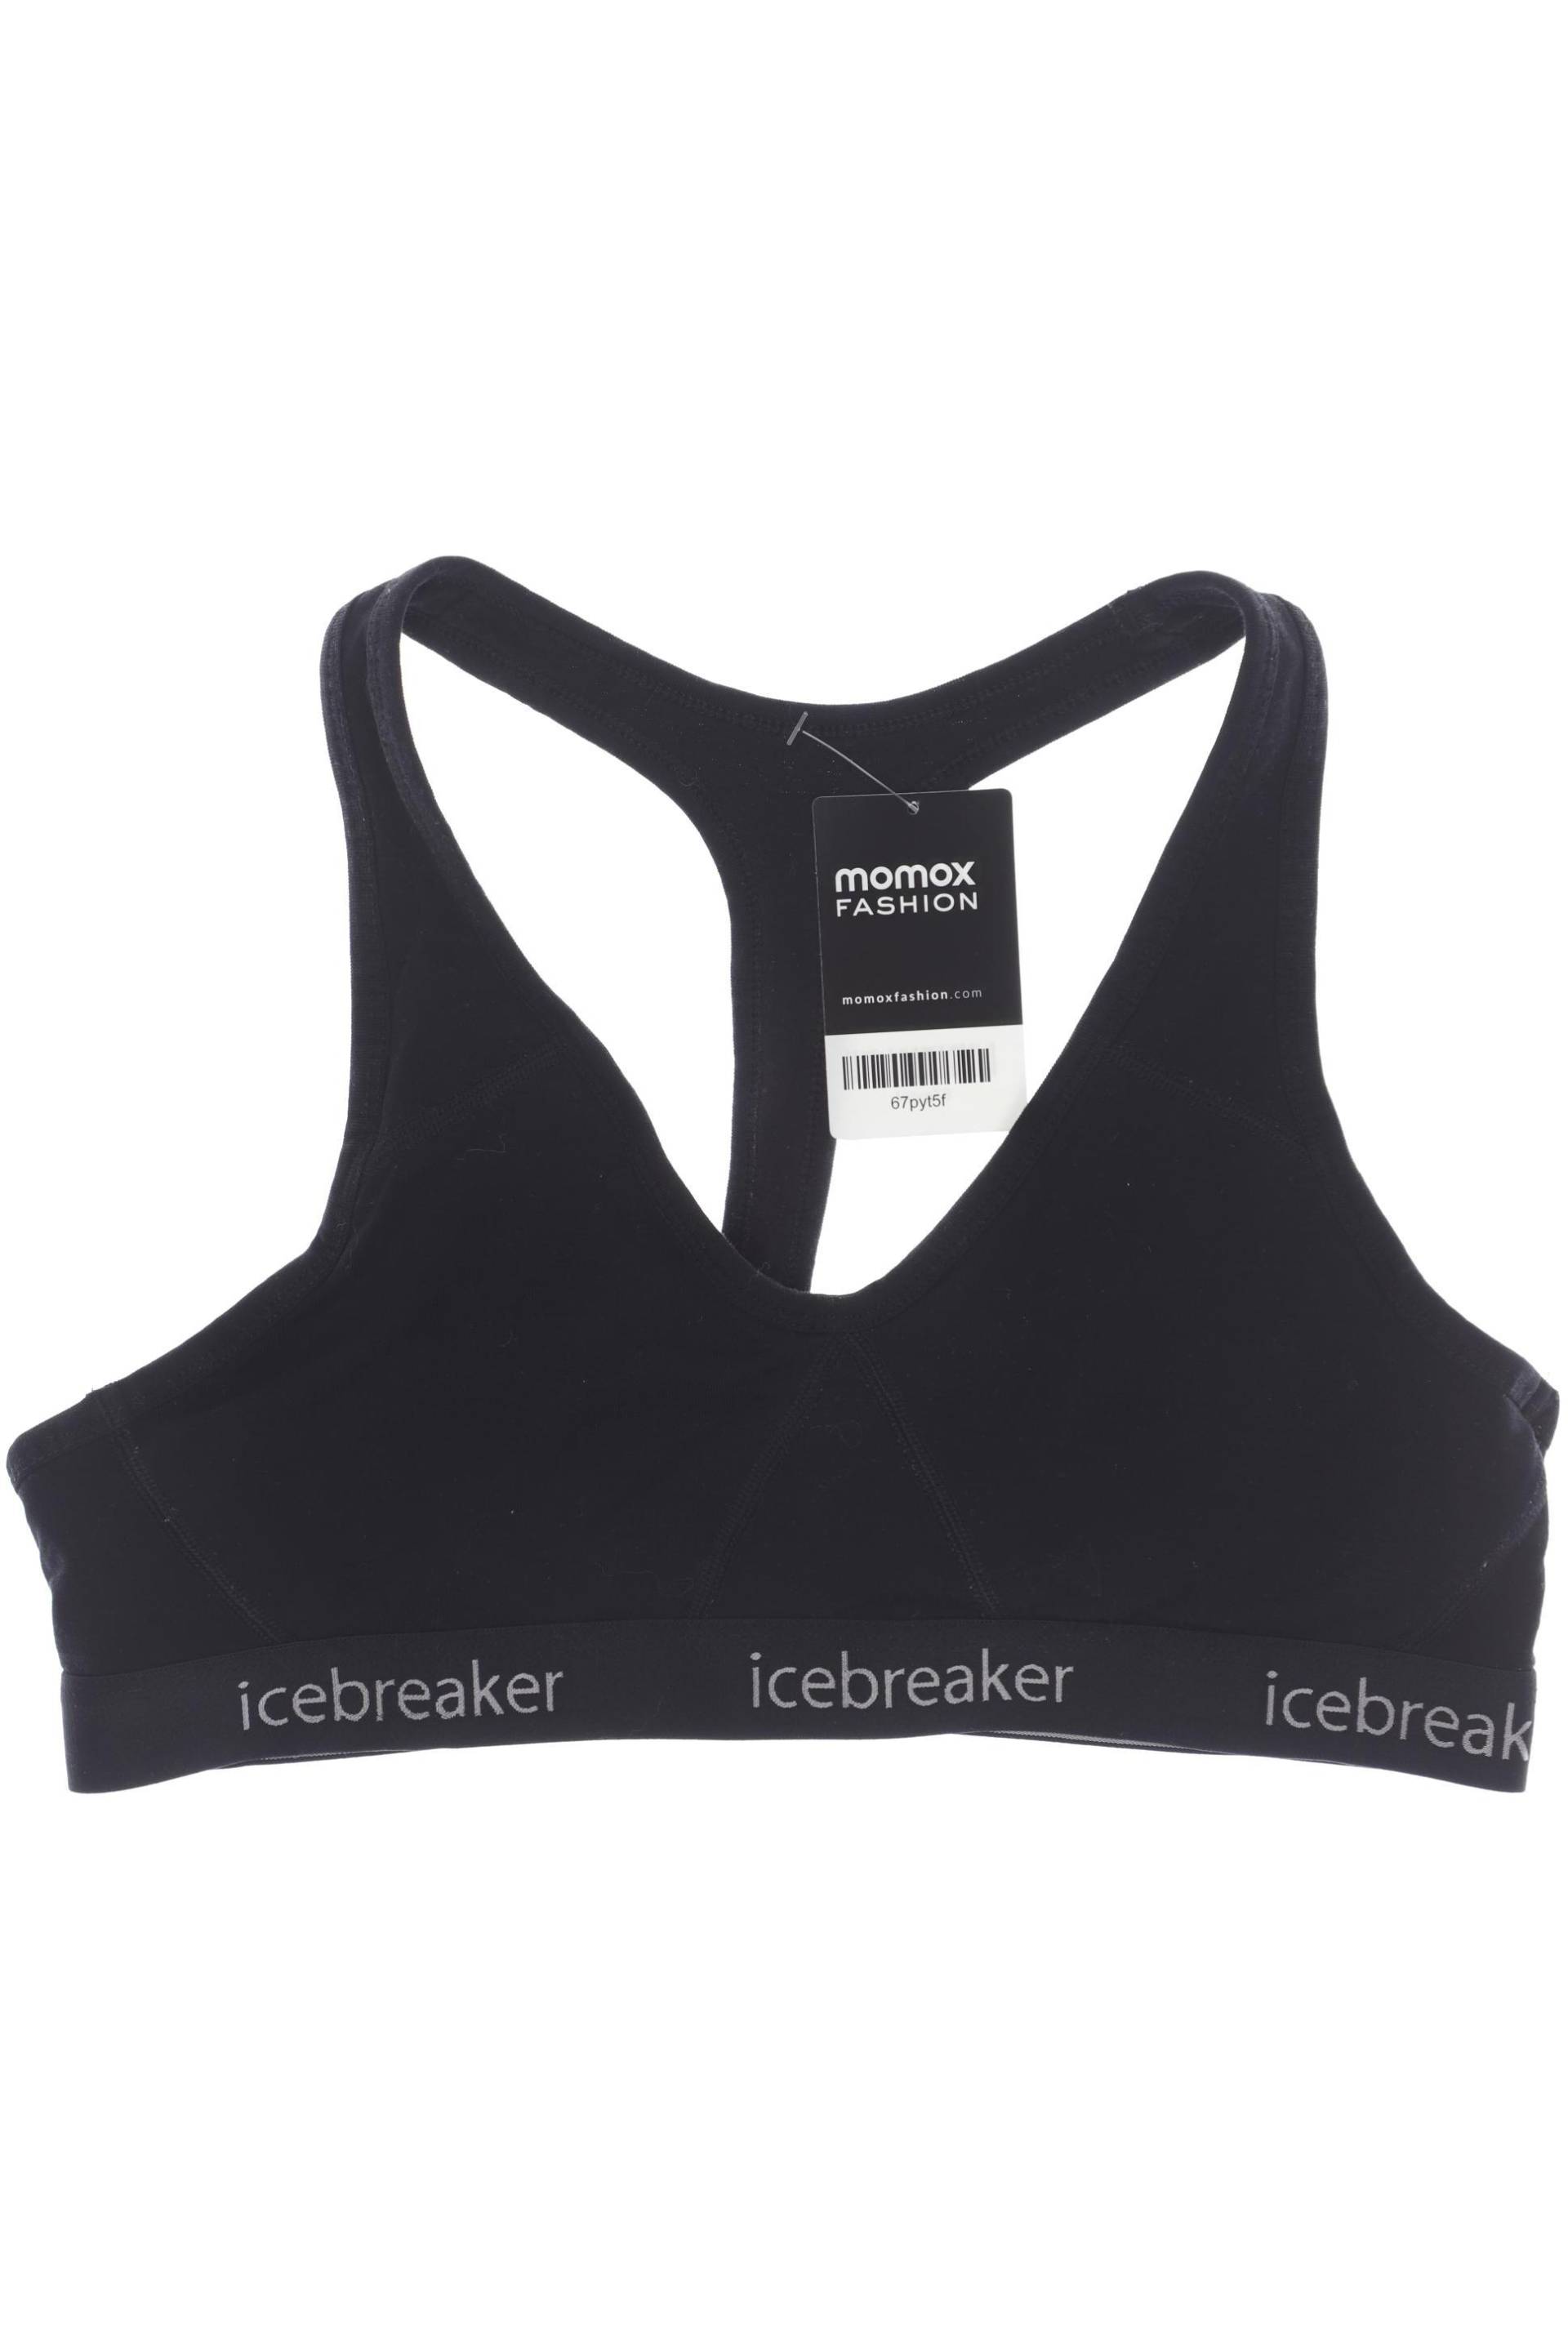 Icebreaker Damen Top, schwarz von Icebreaker